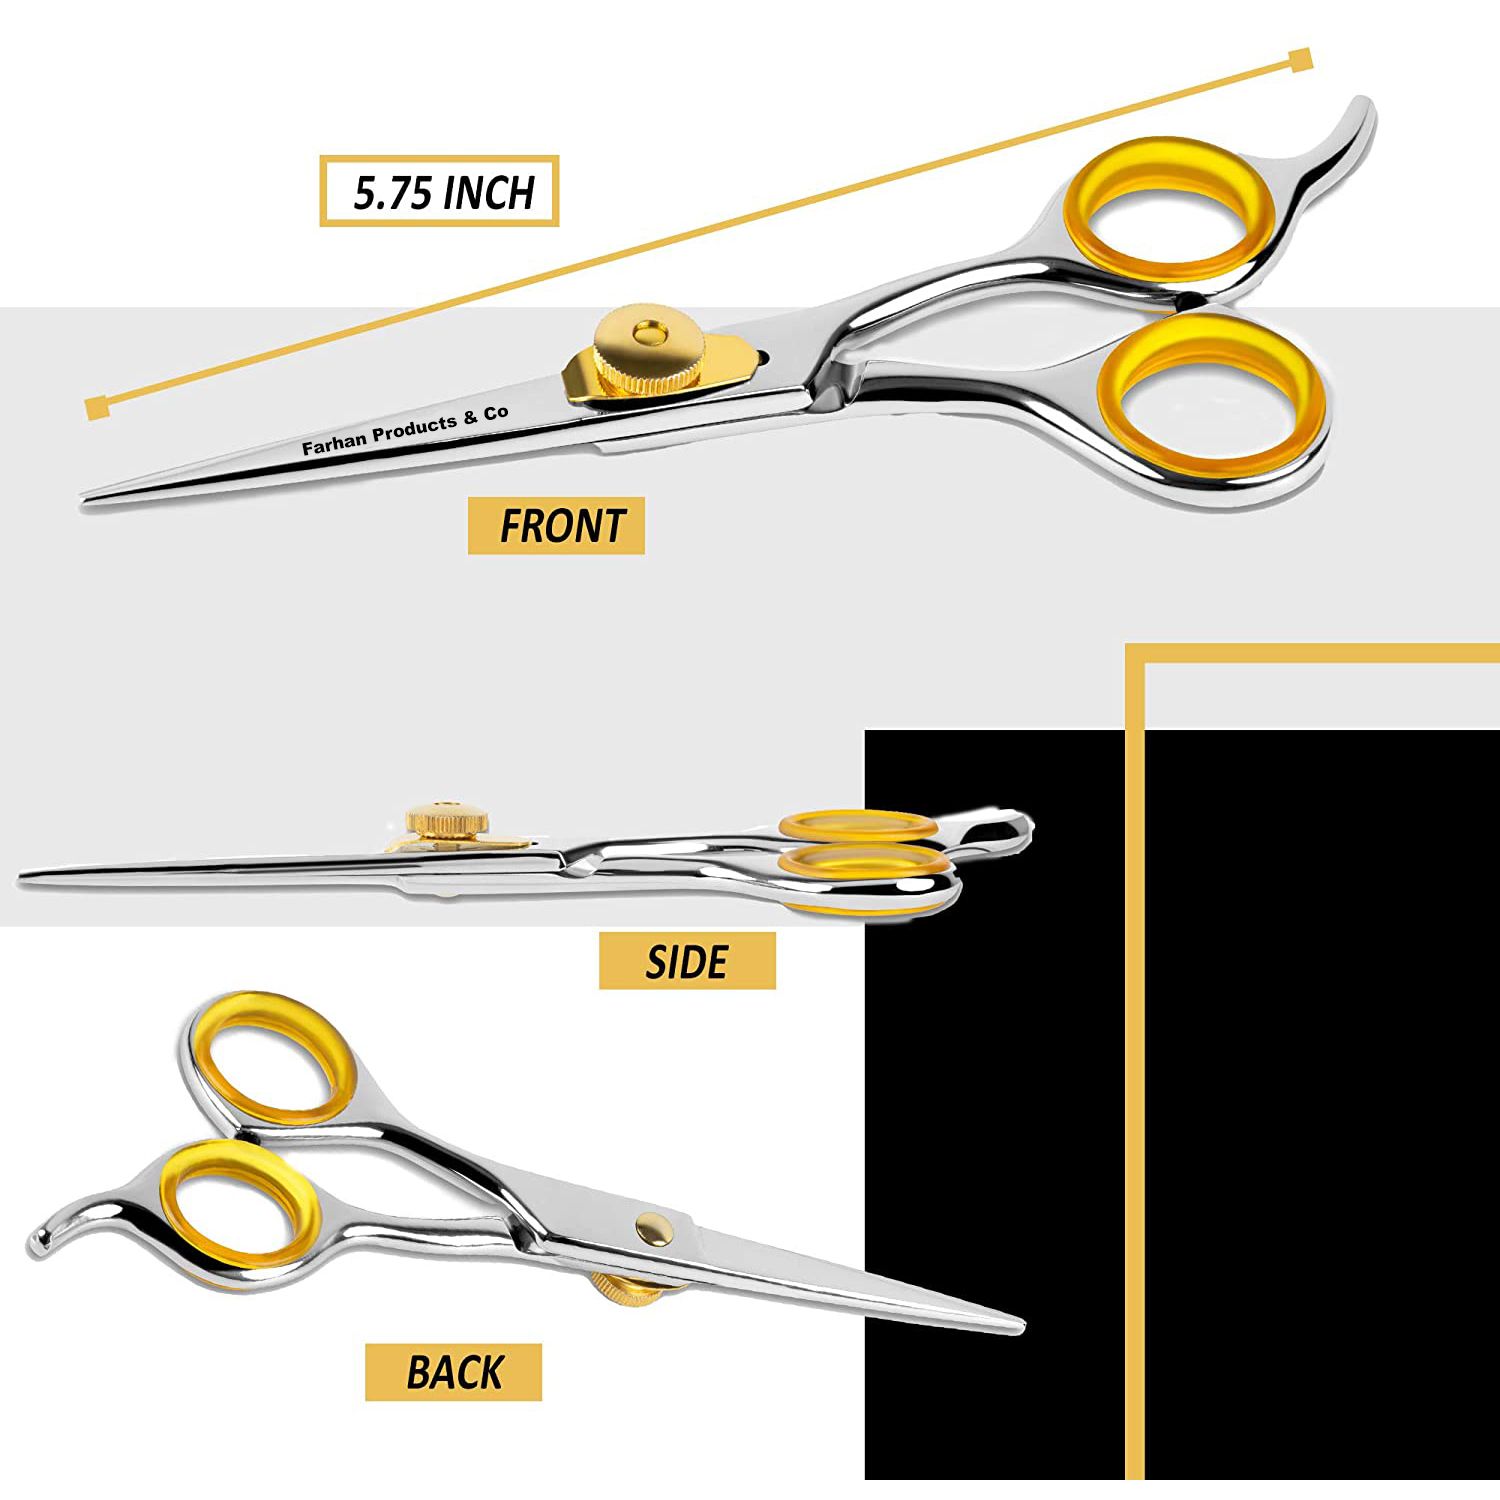 Multi color hair scissors professional hair cut barber shears hairdressing thinning cutting shear haircut scissors